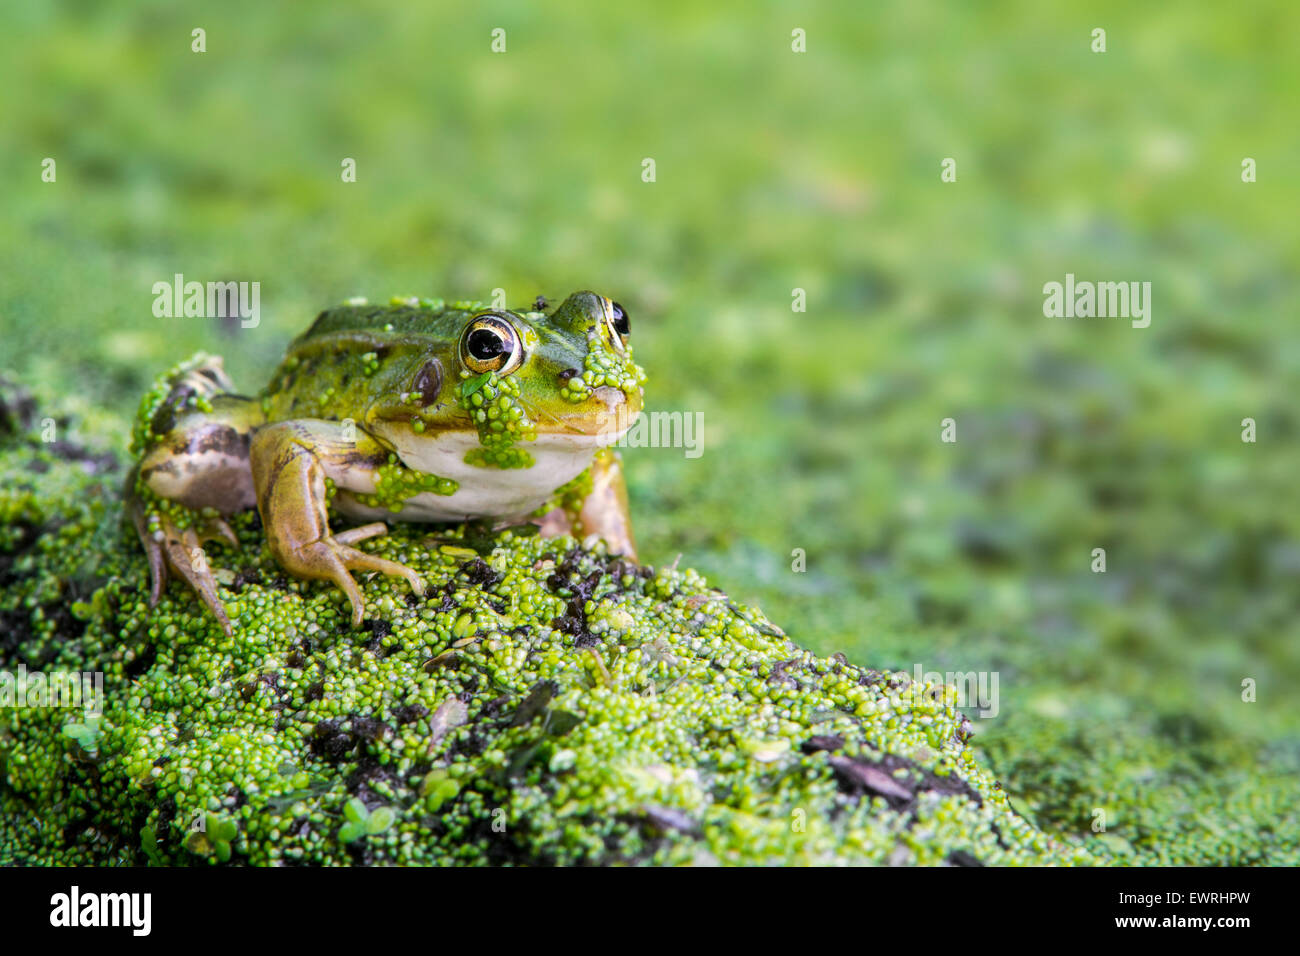 Edible frog / common water frog / green frog (Pelophylax kl. esculentus / Rana kl. esculenta) covered in duckweed in pond Stock Photo